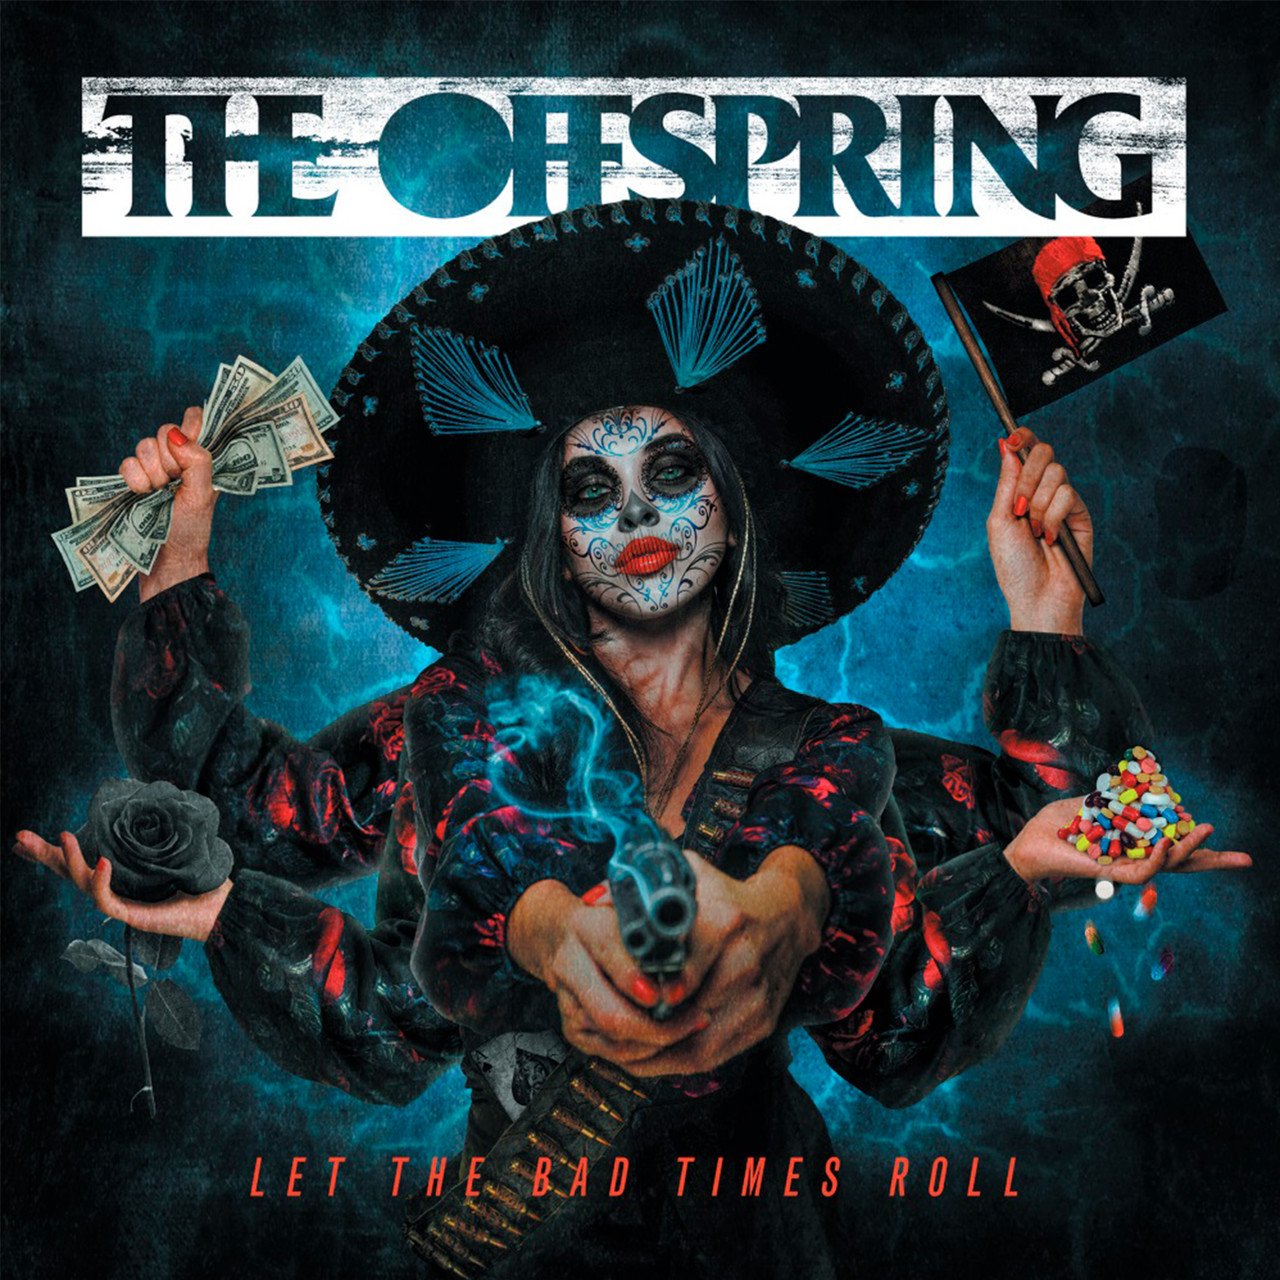 Панк Concord The Offspring - Let The Bad Times Roll дем картинки супер времена года весна 8 демонстр картинок с текстом 173х220мм